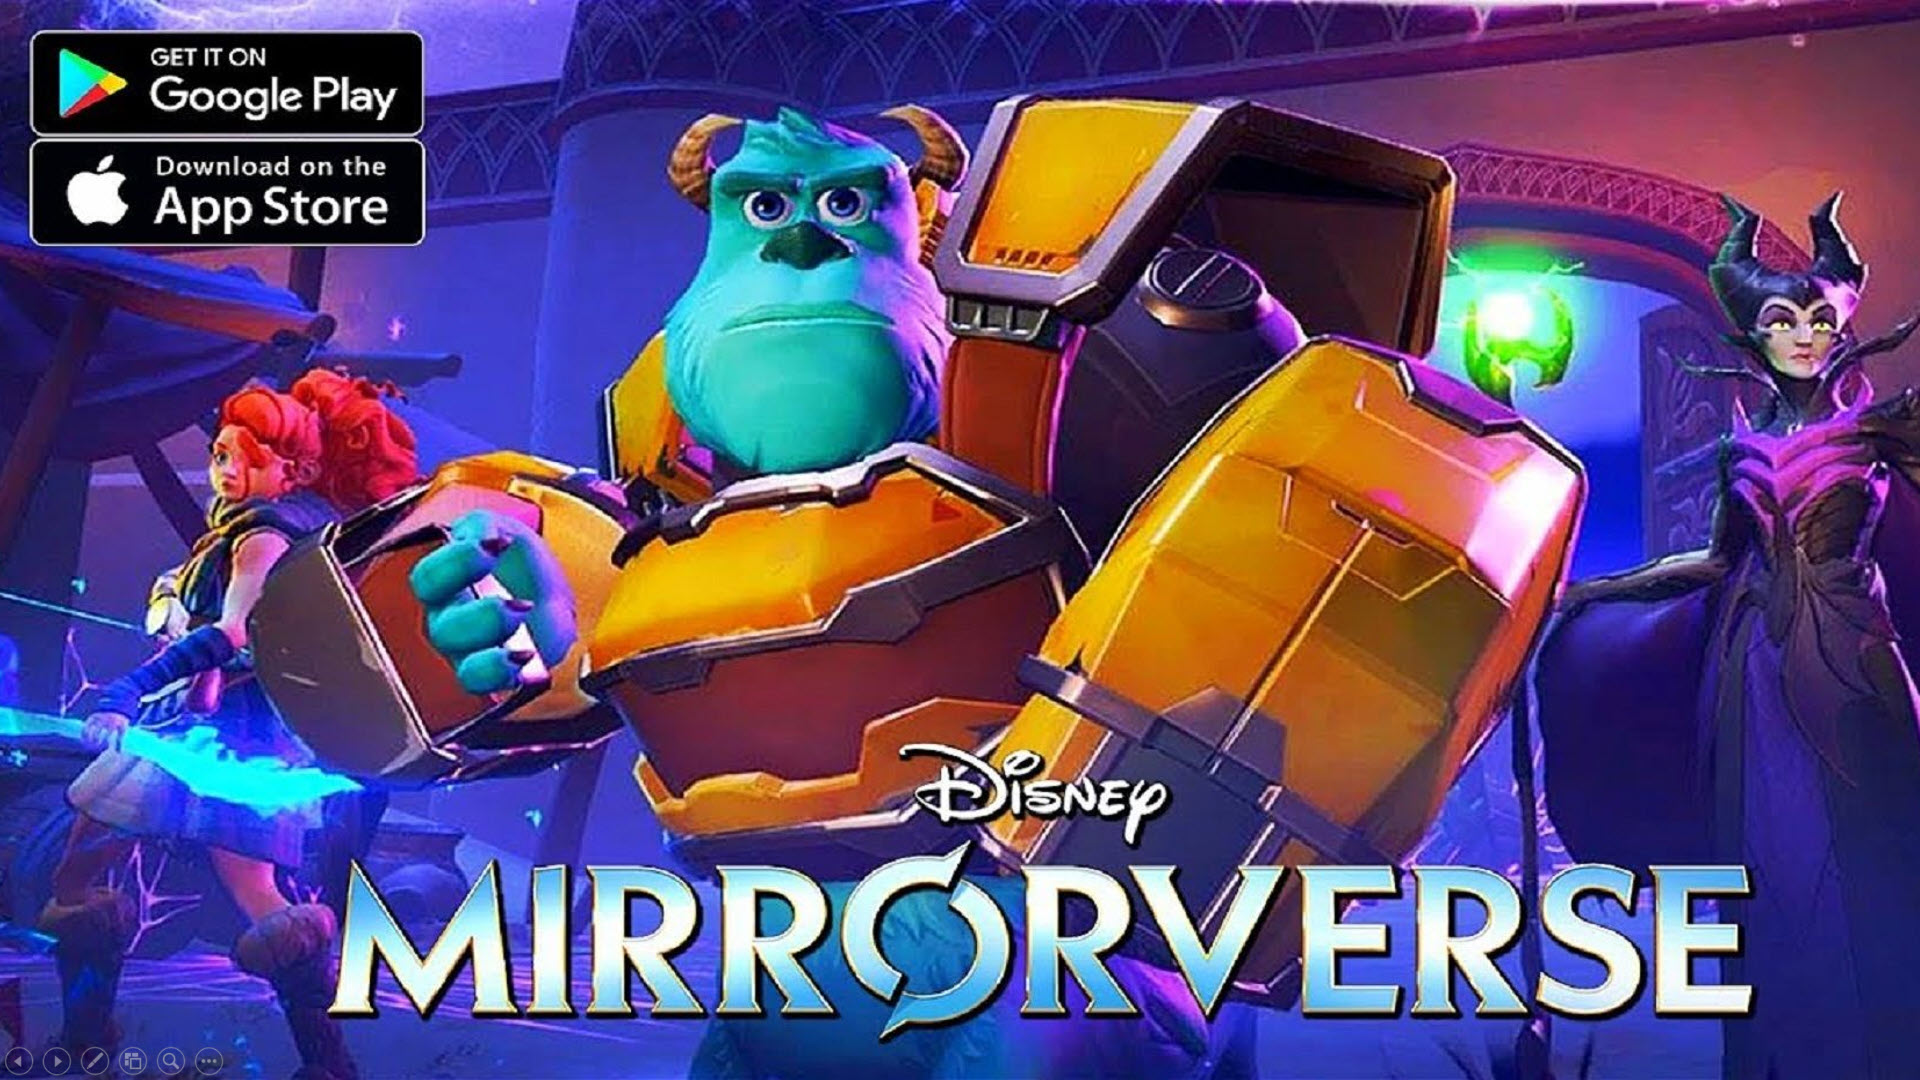 Prepare to enter the Disney Mirrorverse, all new Video Game